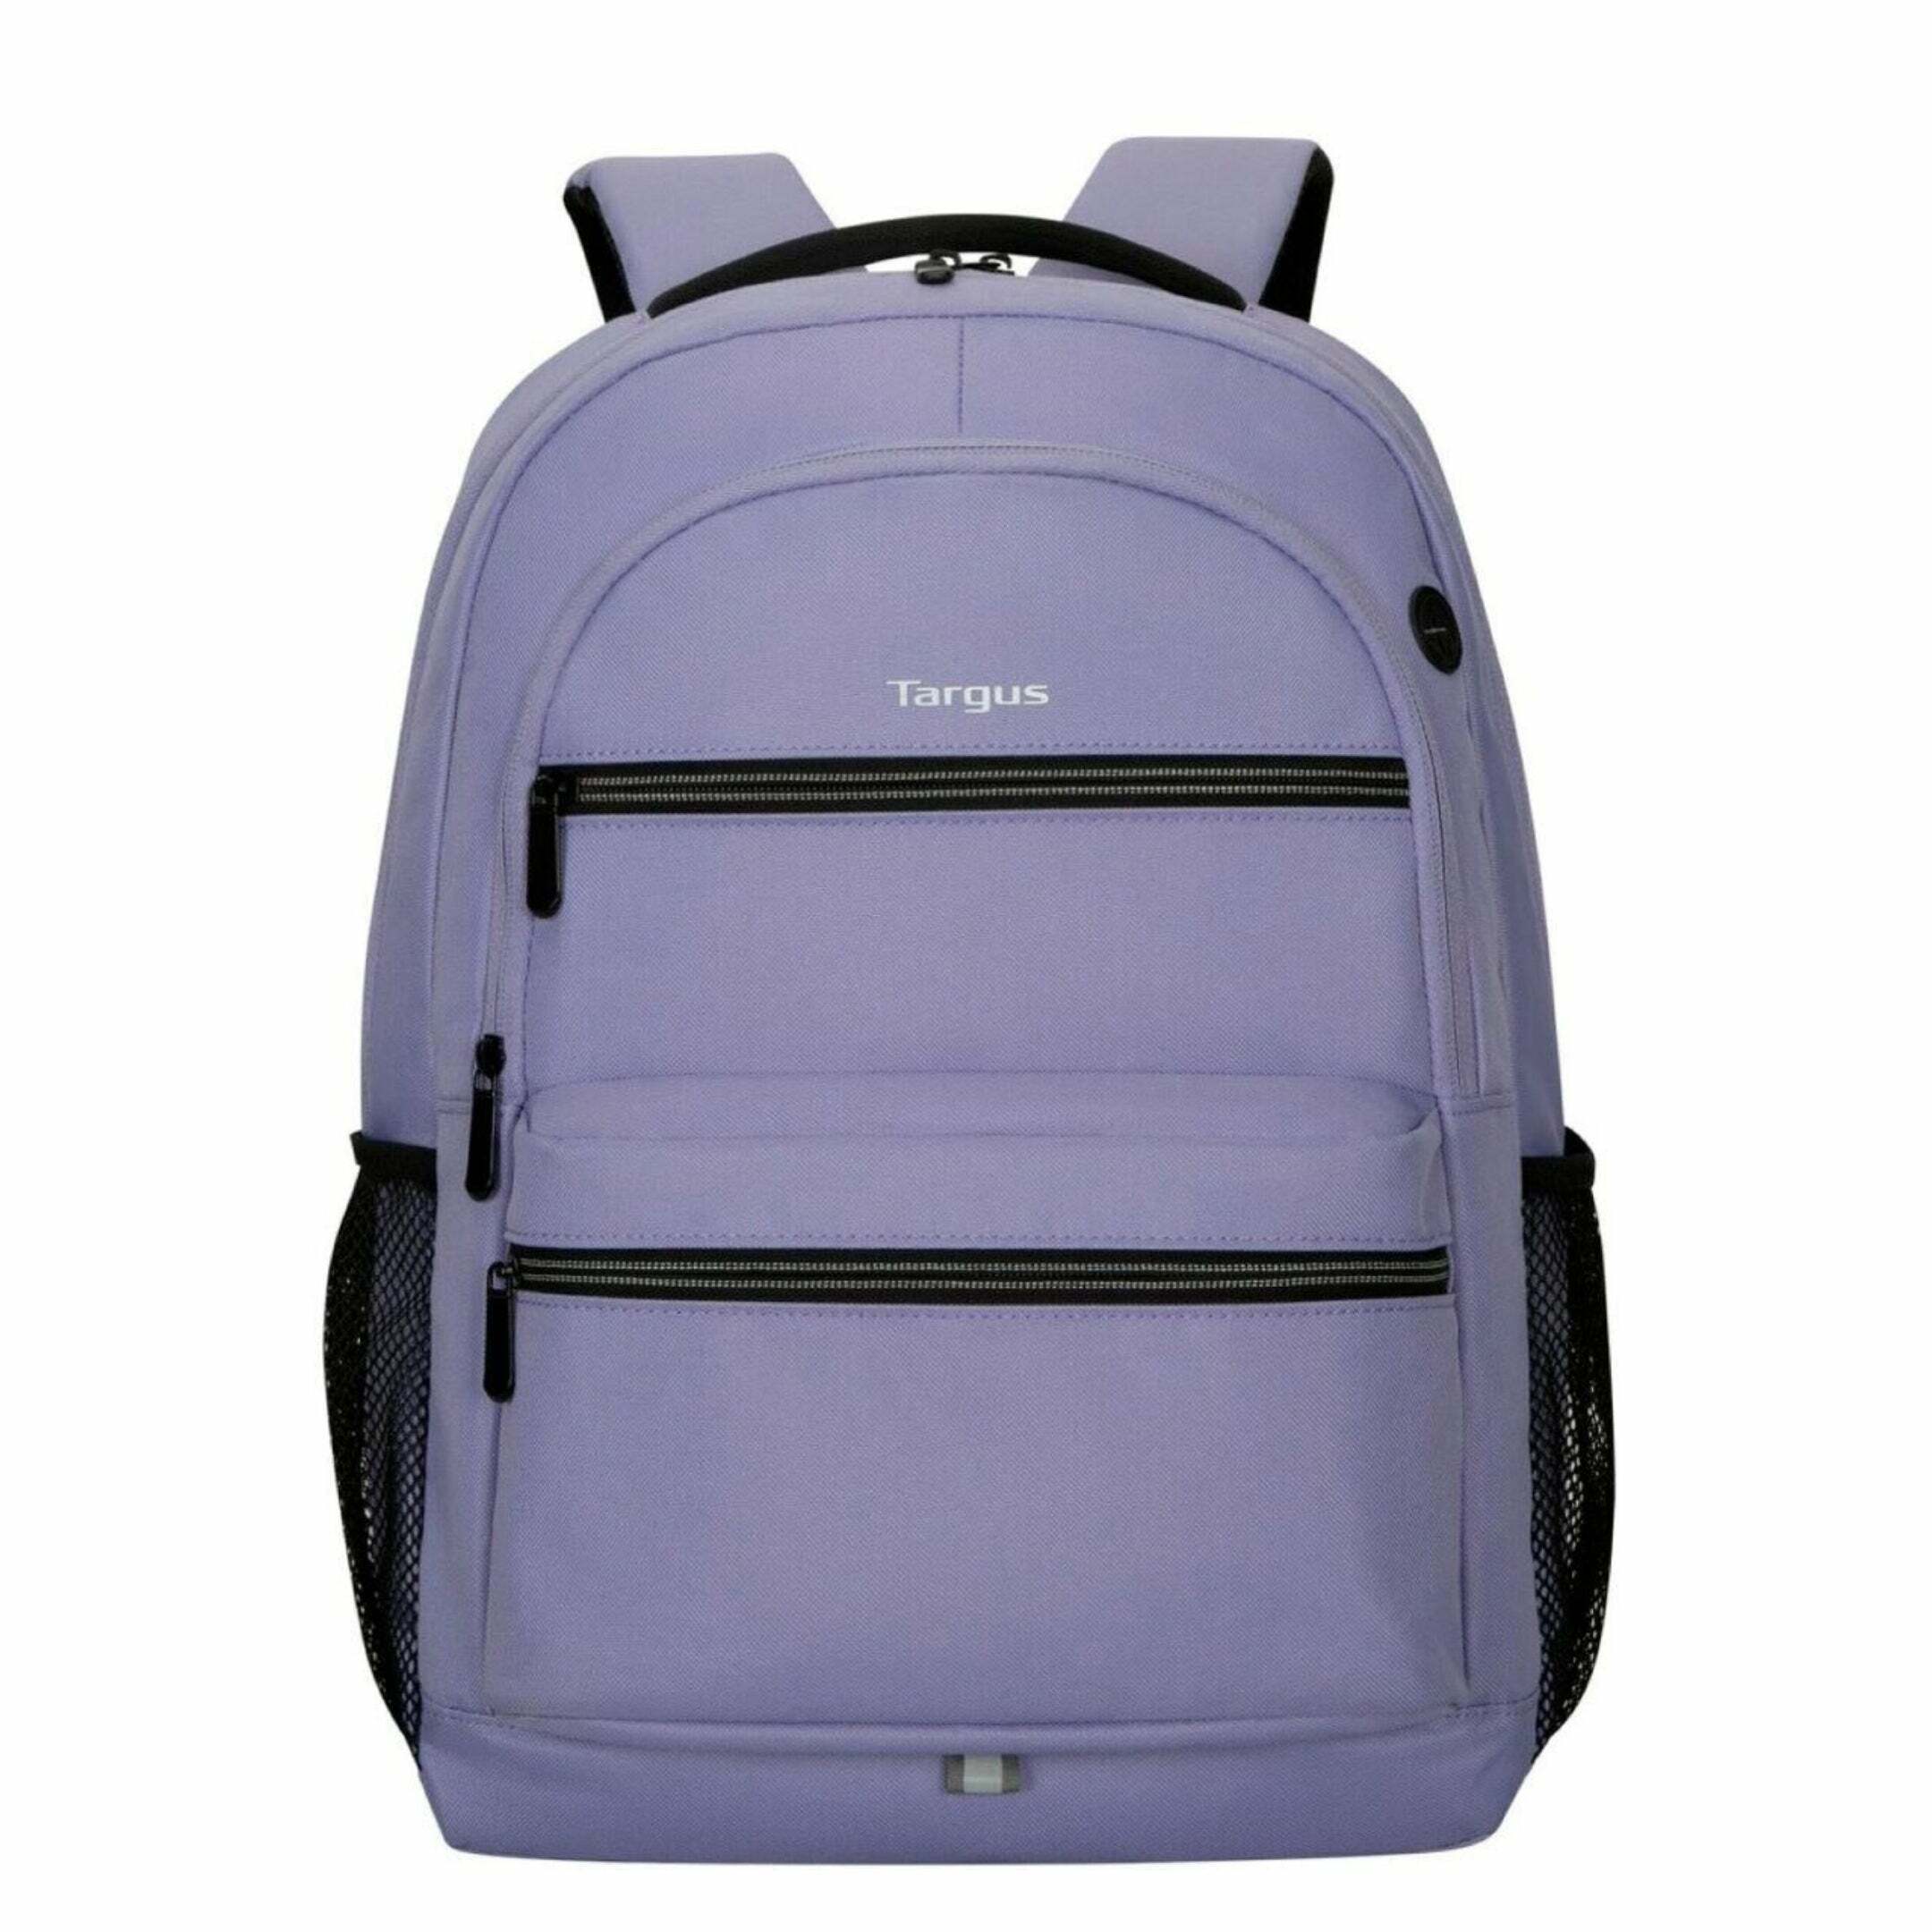 Targus Octave II Backpack for 15.6” Laptops - Ergonomic and Reflective Design, Purple